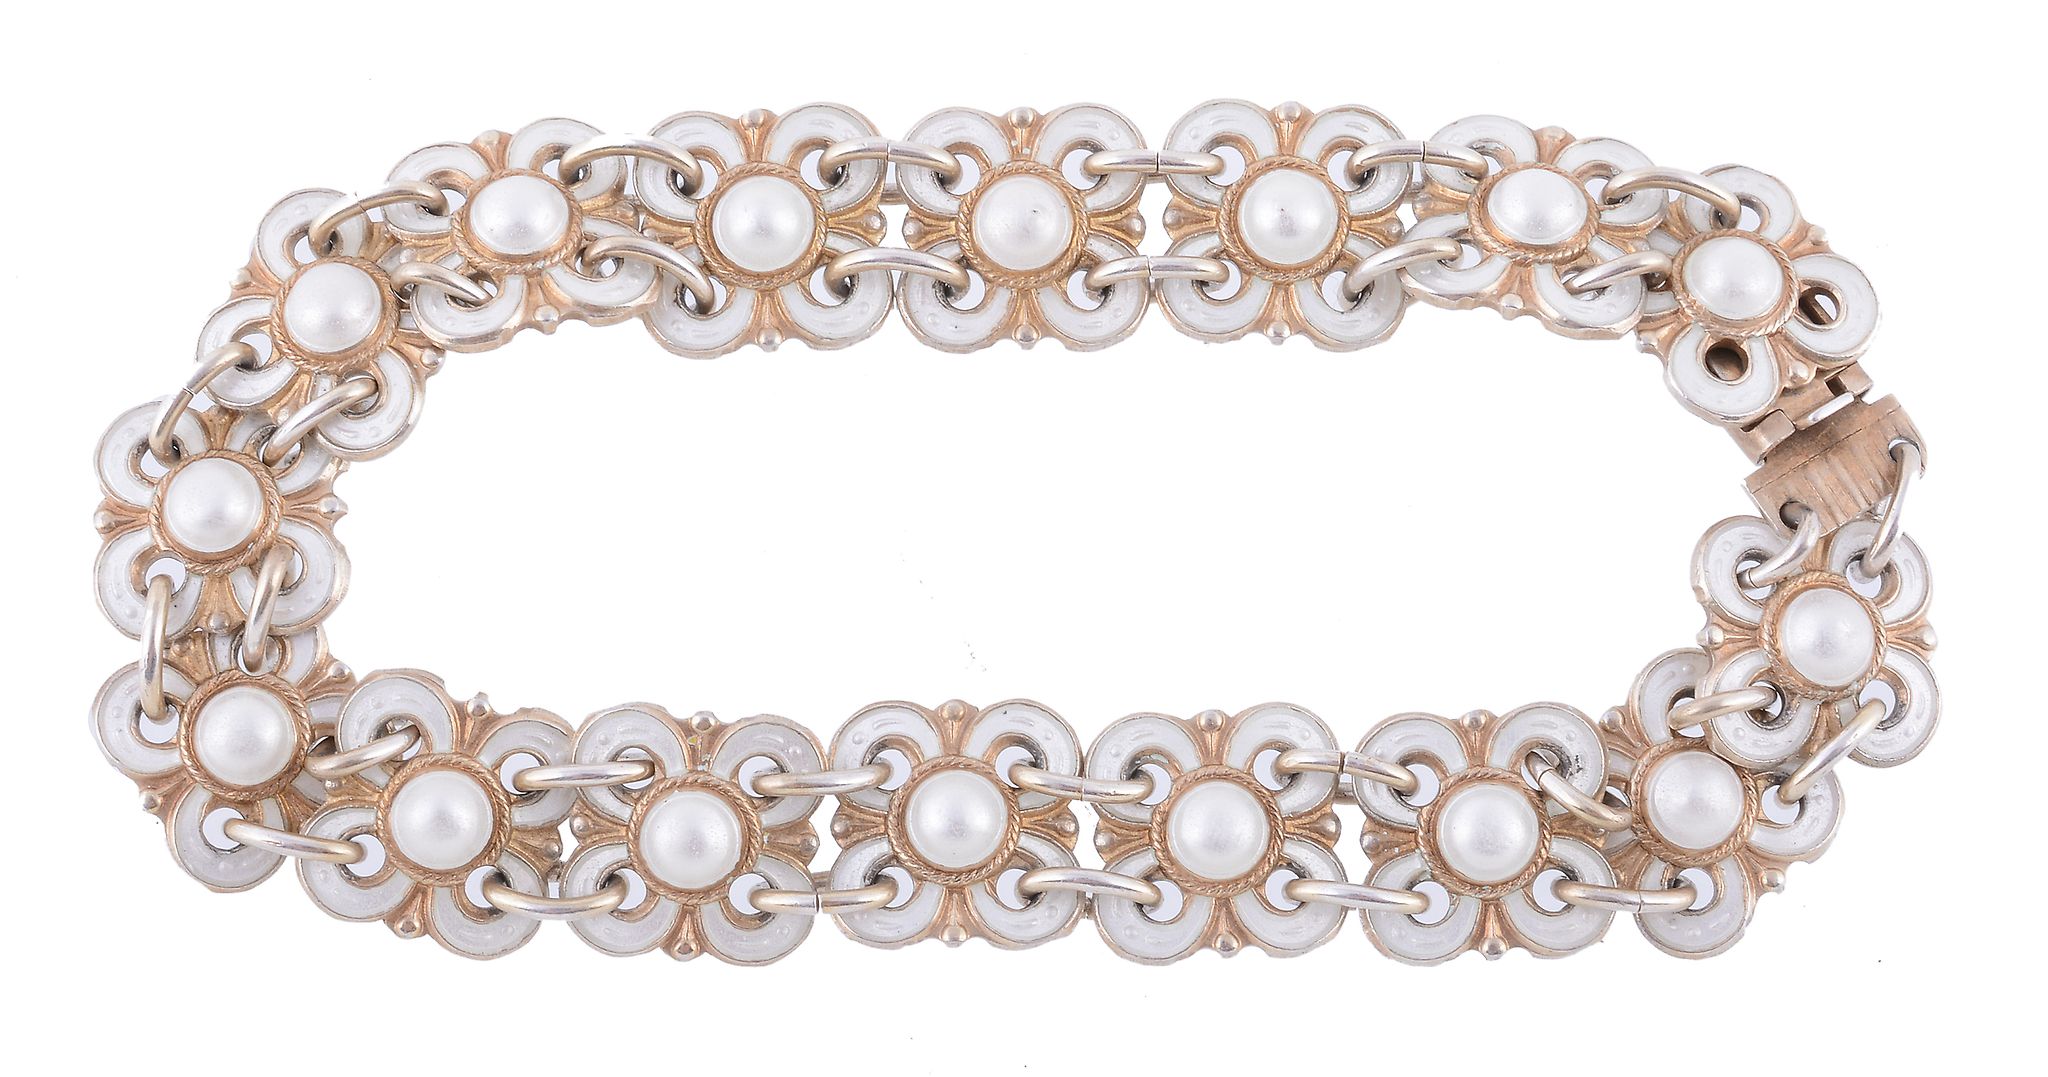 A David Andersen enamel bracelet , the white enamelled pierced quatrefoil panels with polished